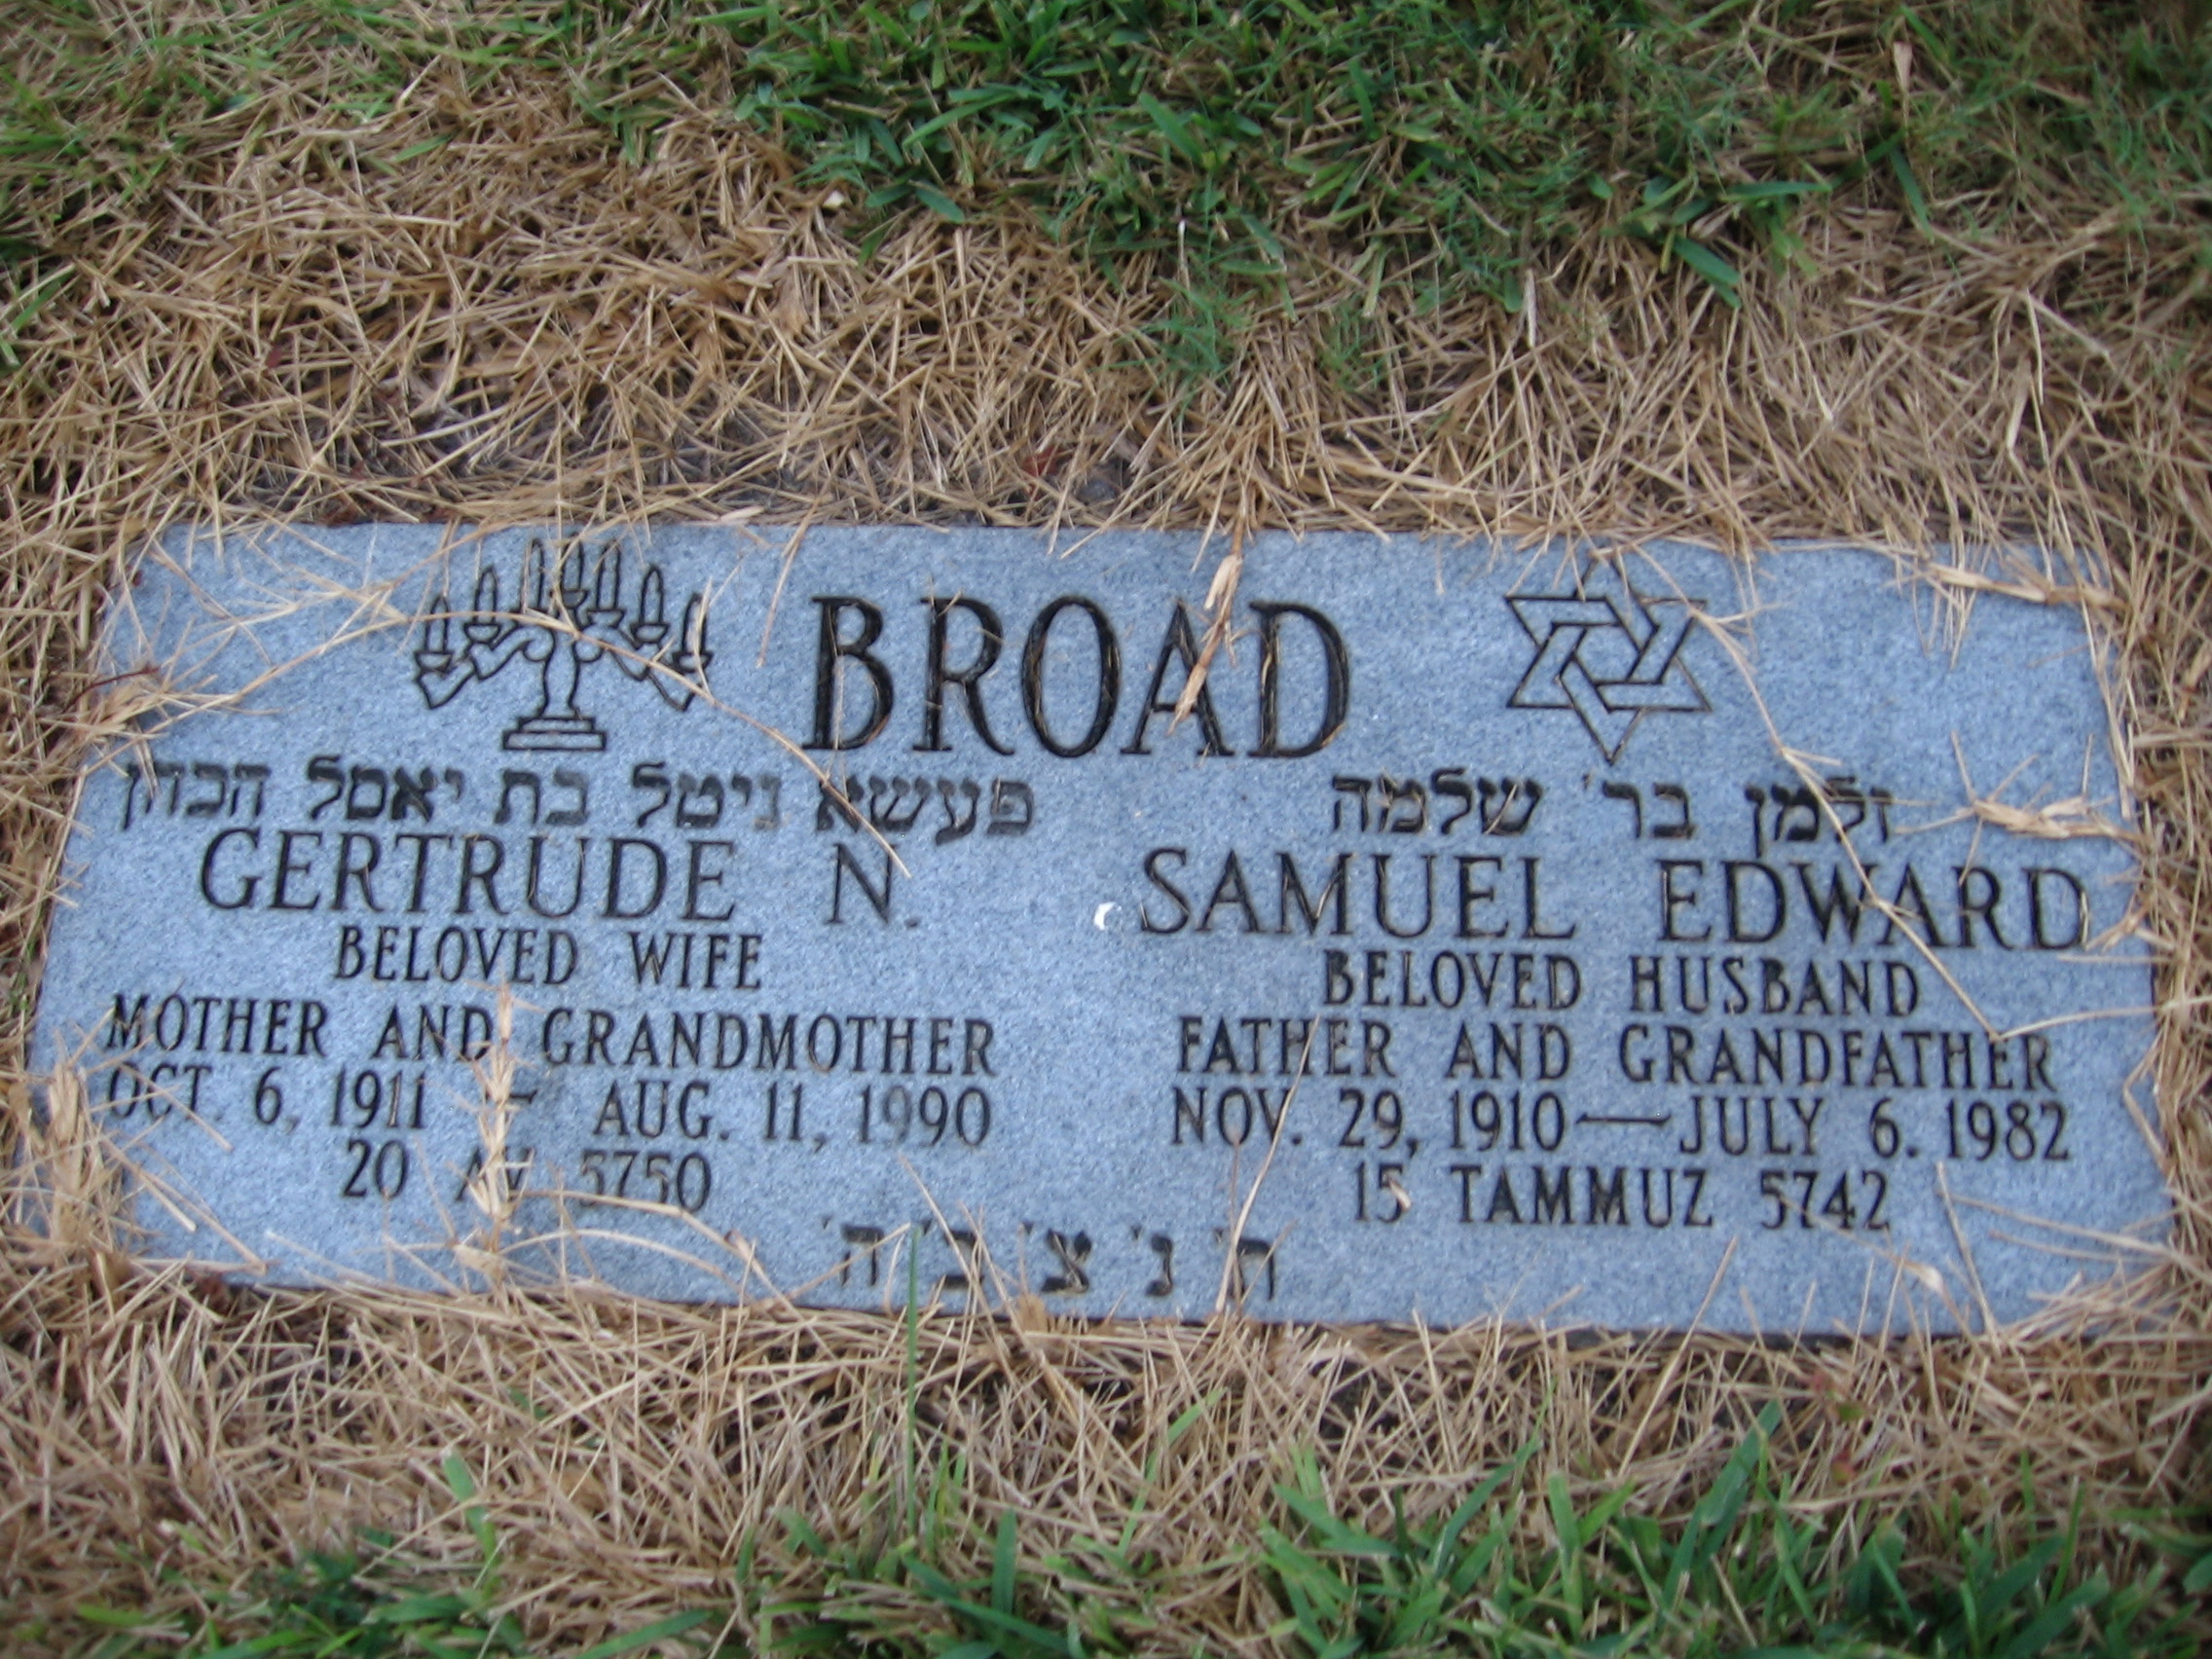 Samuel Edward Broad